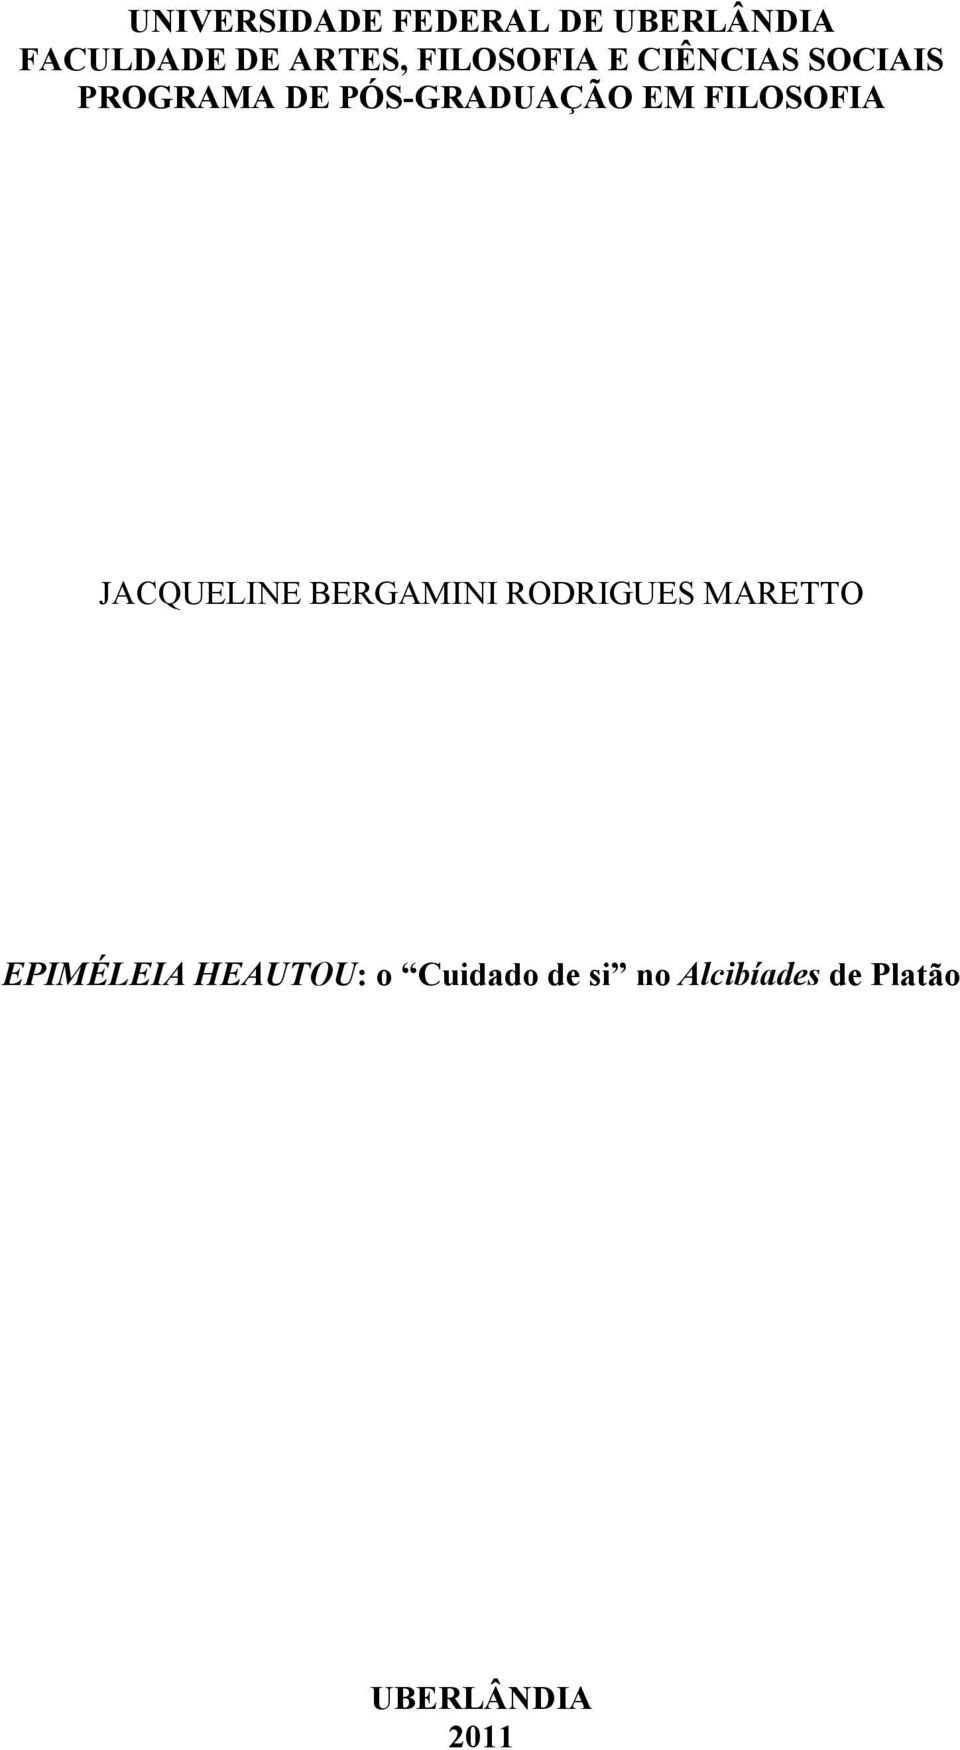 FILOSOFIA JACQUELINE BERGAMINI RODRIGUES MARETTO EPIMÉLEIA